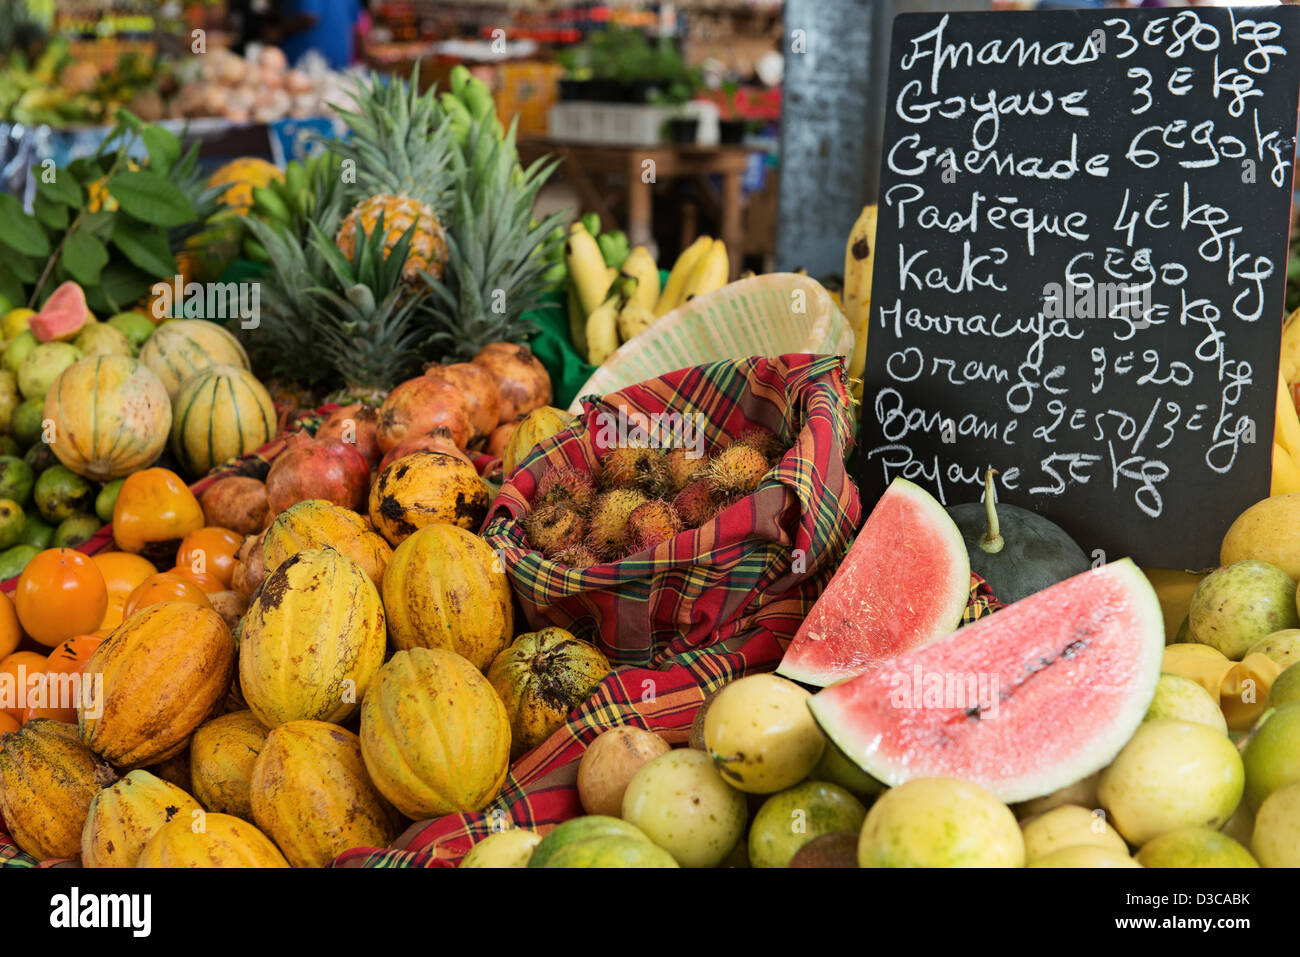 Tropical fruits and vegetables at Fort-de-France market, Martinique Island, Caribbean Sea, Lesser Antilles, France Stock Photo